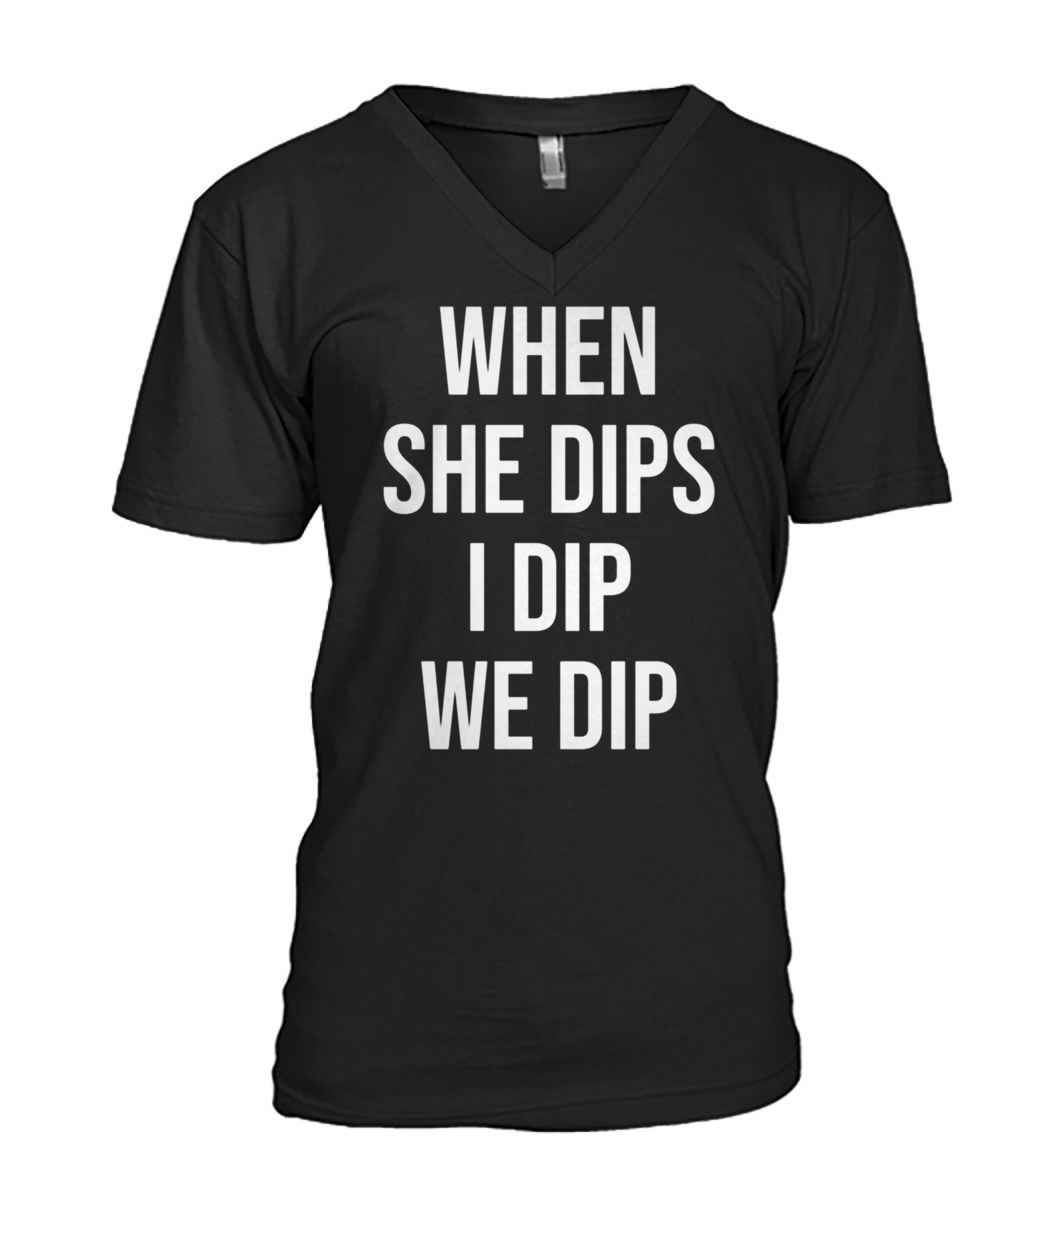 When she dip I dip we dip mens v-neck